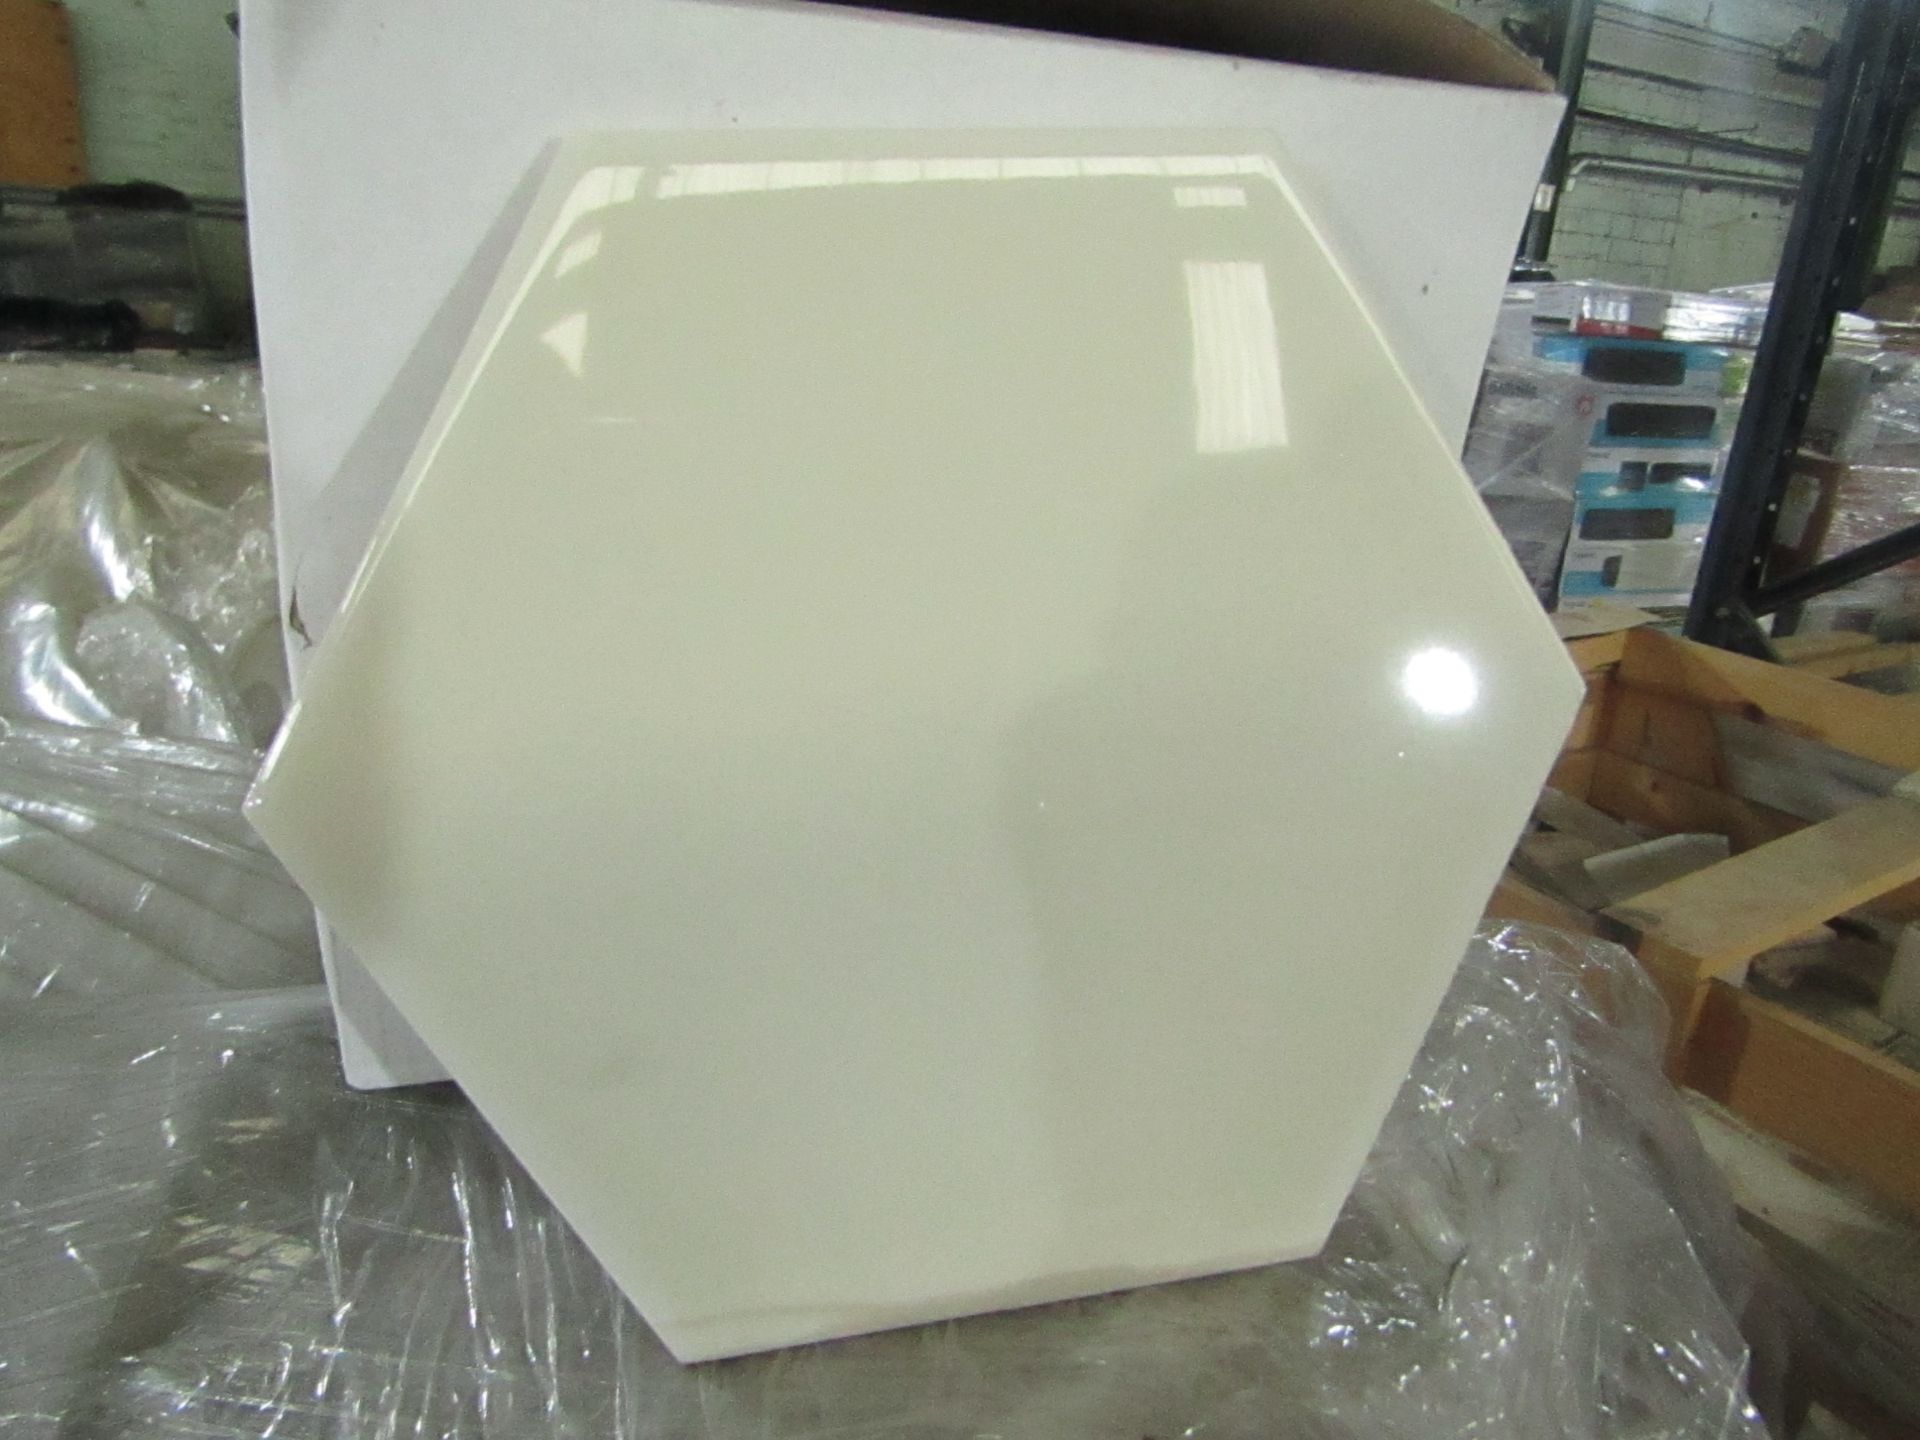 32x Boxes of 50 Johnsons SAV02A Hexagonal glazed wall tiles in Oat Gloss Total RRP £24.99 per box,